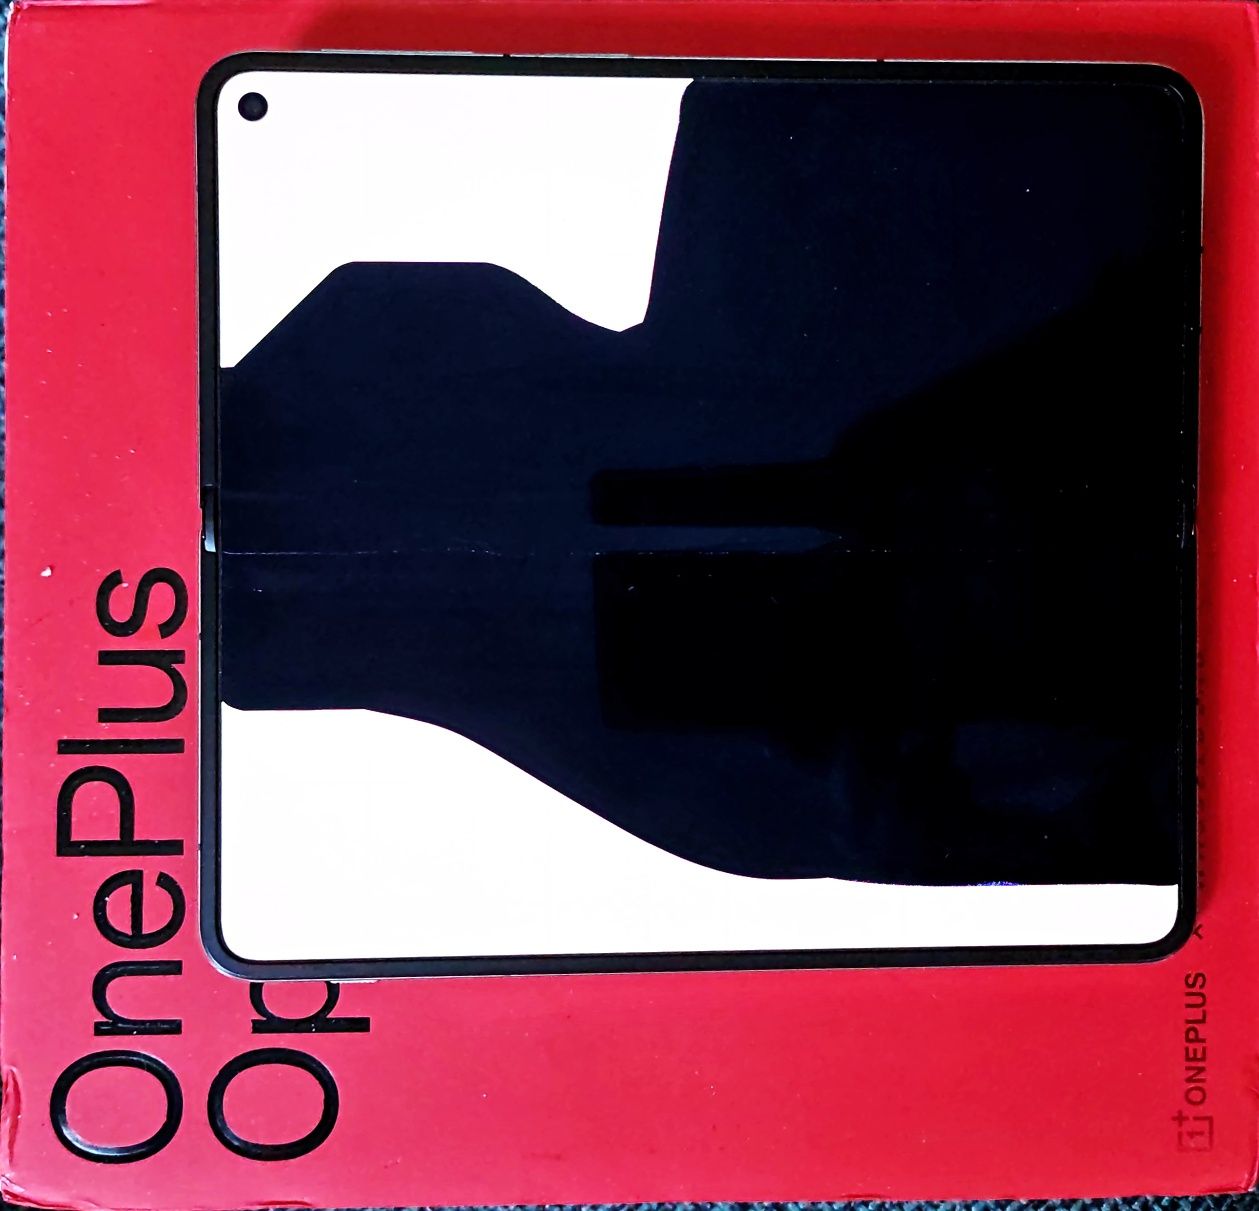 Vând Oneplus Open cu display intern stricat